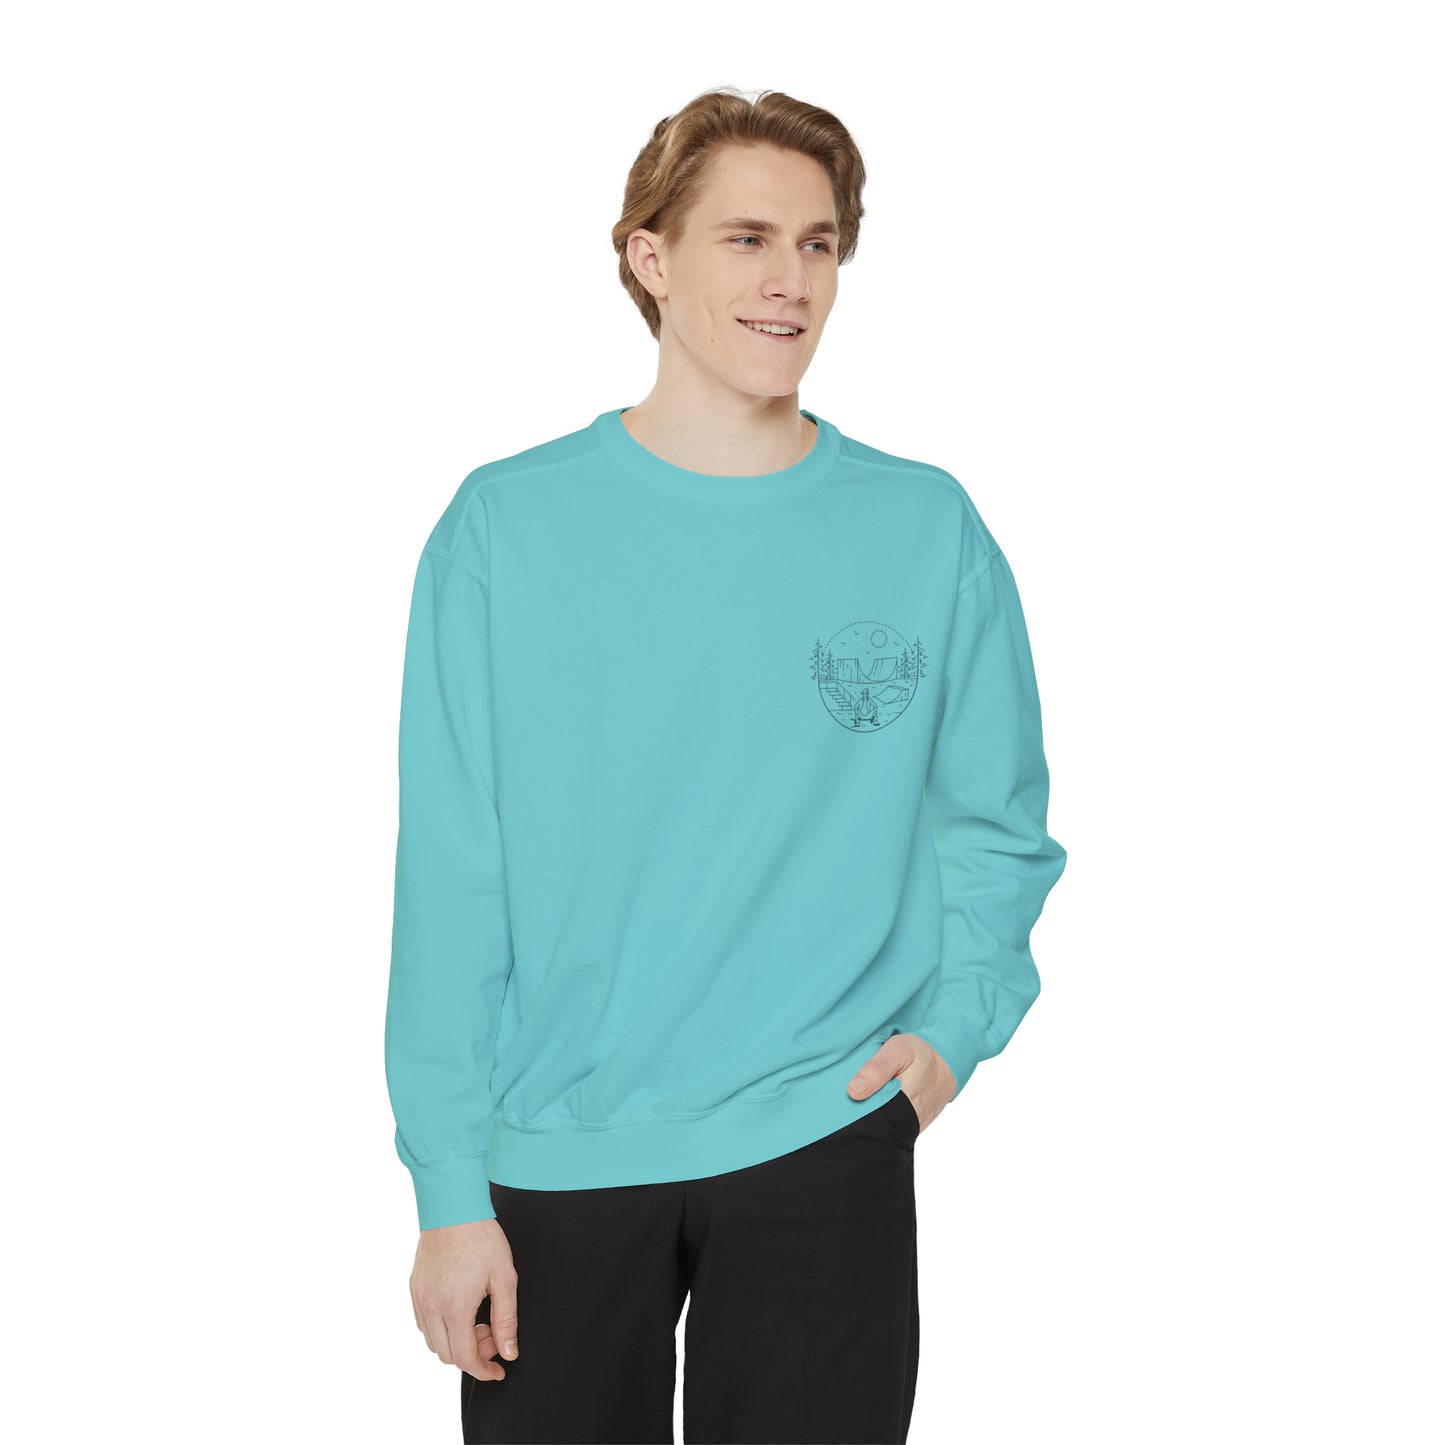 Skater 2 - blk - Unisex Garment-Dyed Sweatshirt